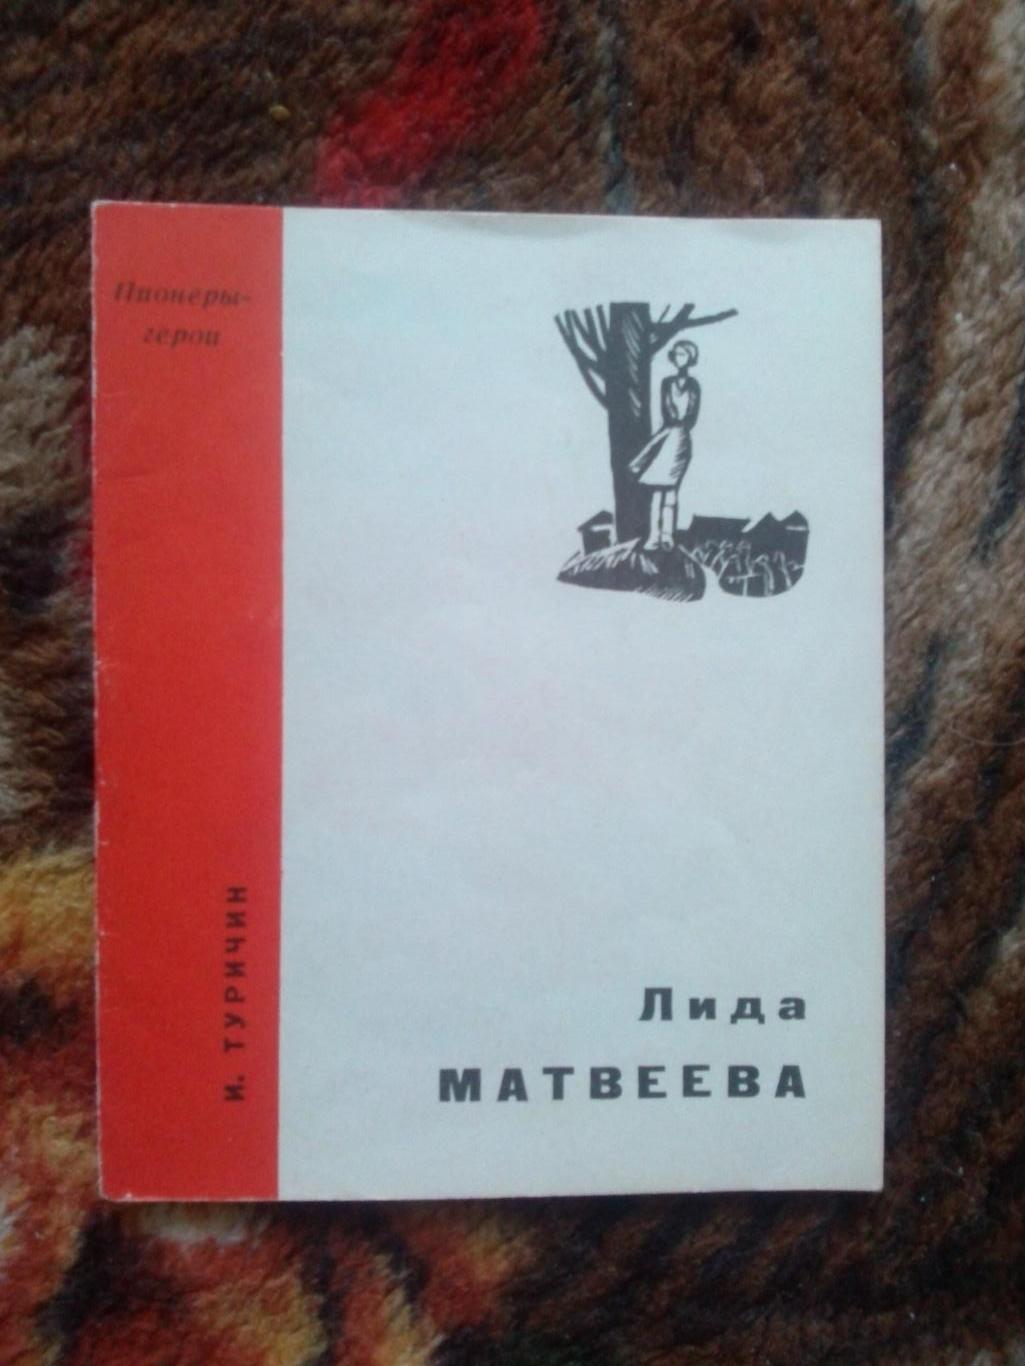 Пионеры-герои (Плакат + брошюра) 1967 г. Лида Матвеева (Пионер , агитация) 3